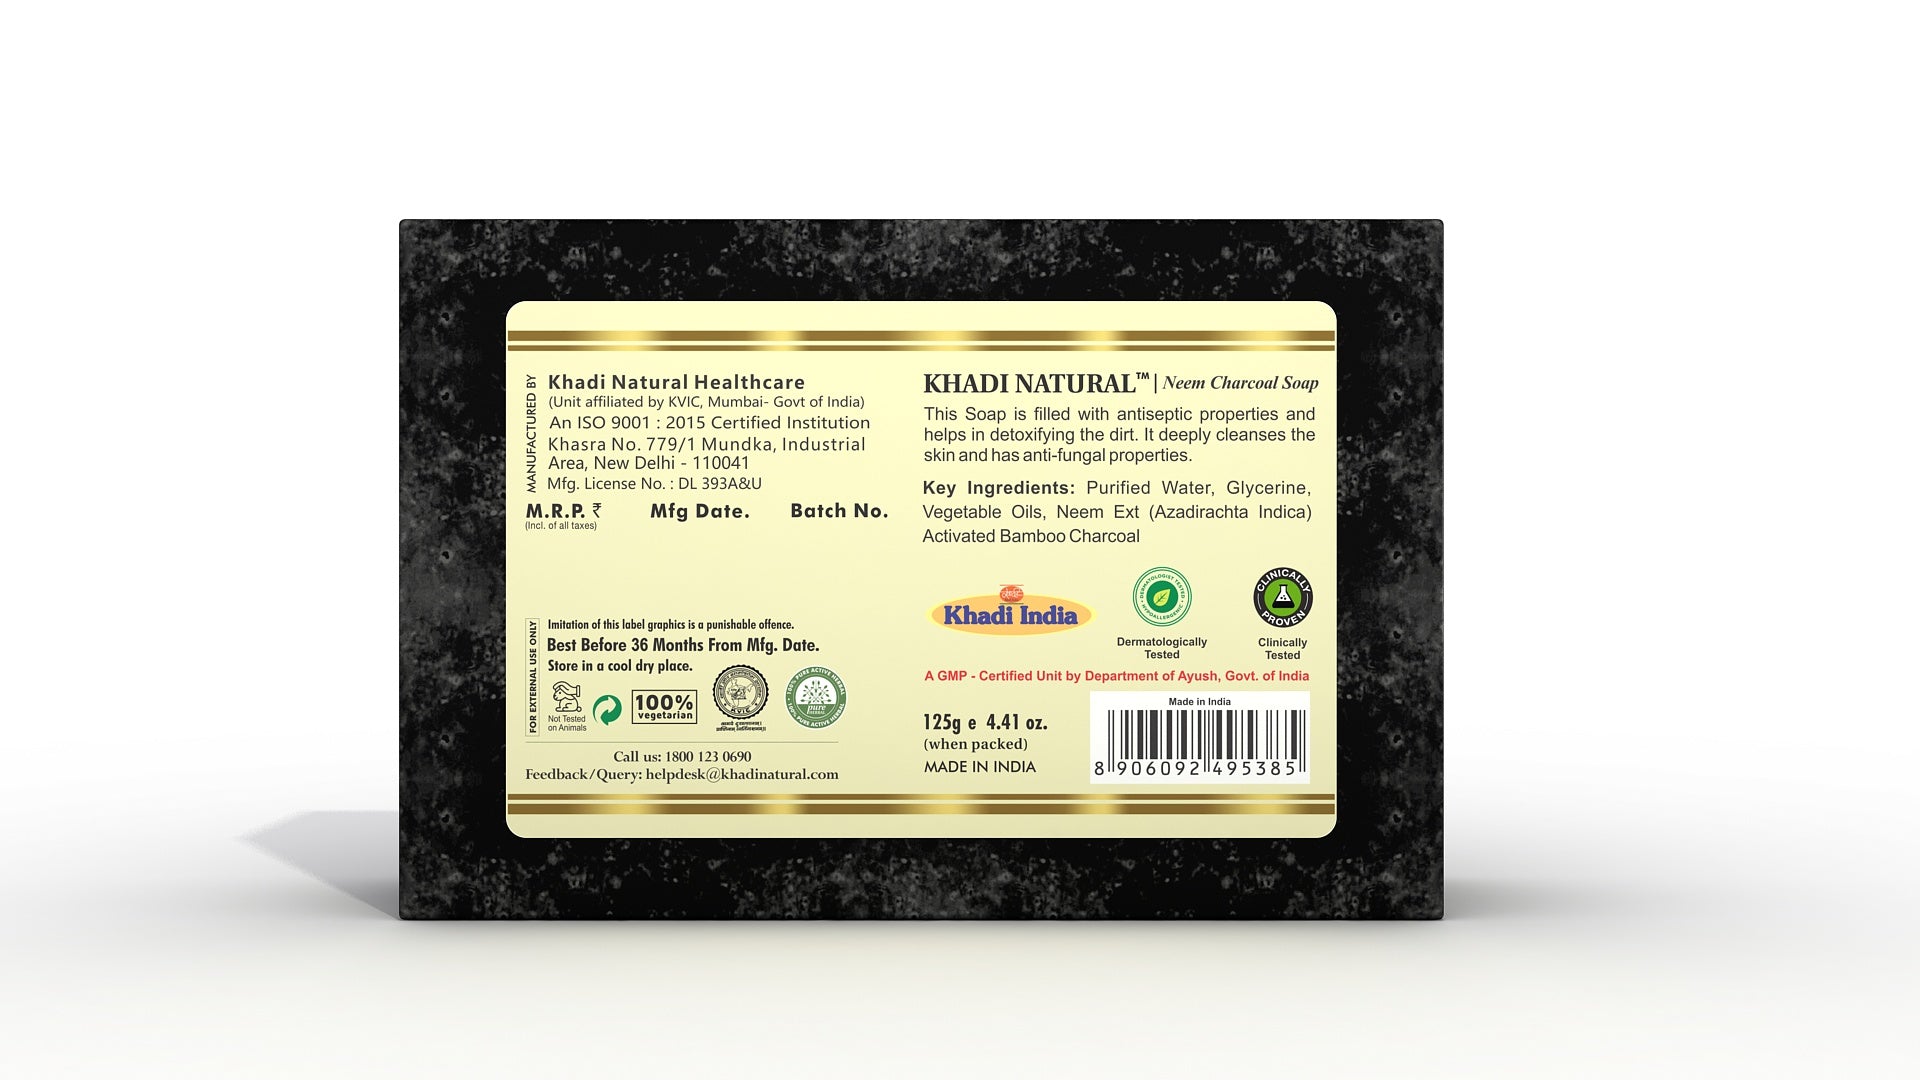 Khadi Natural Neem Charcoal Soap 125g